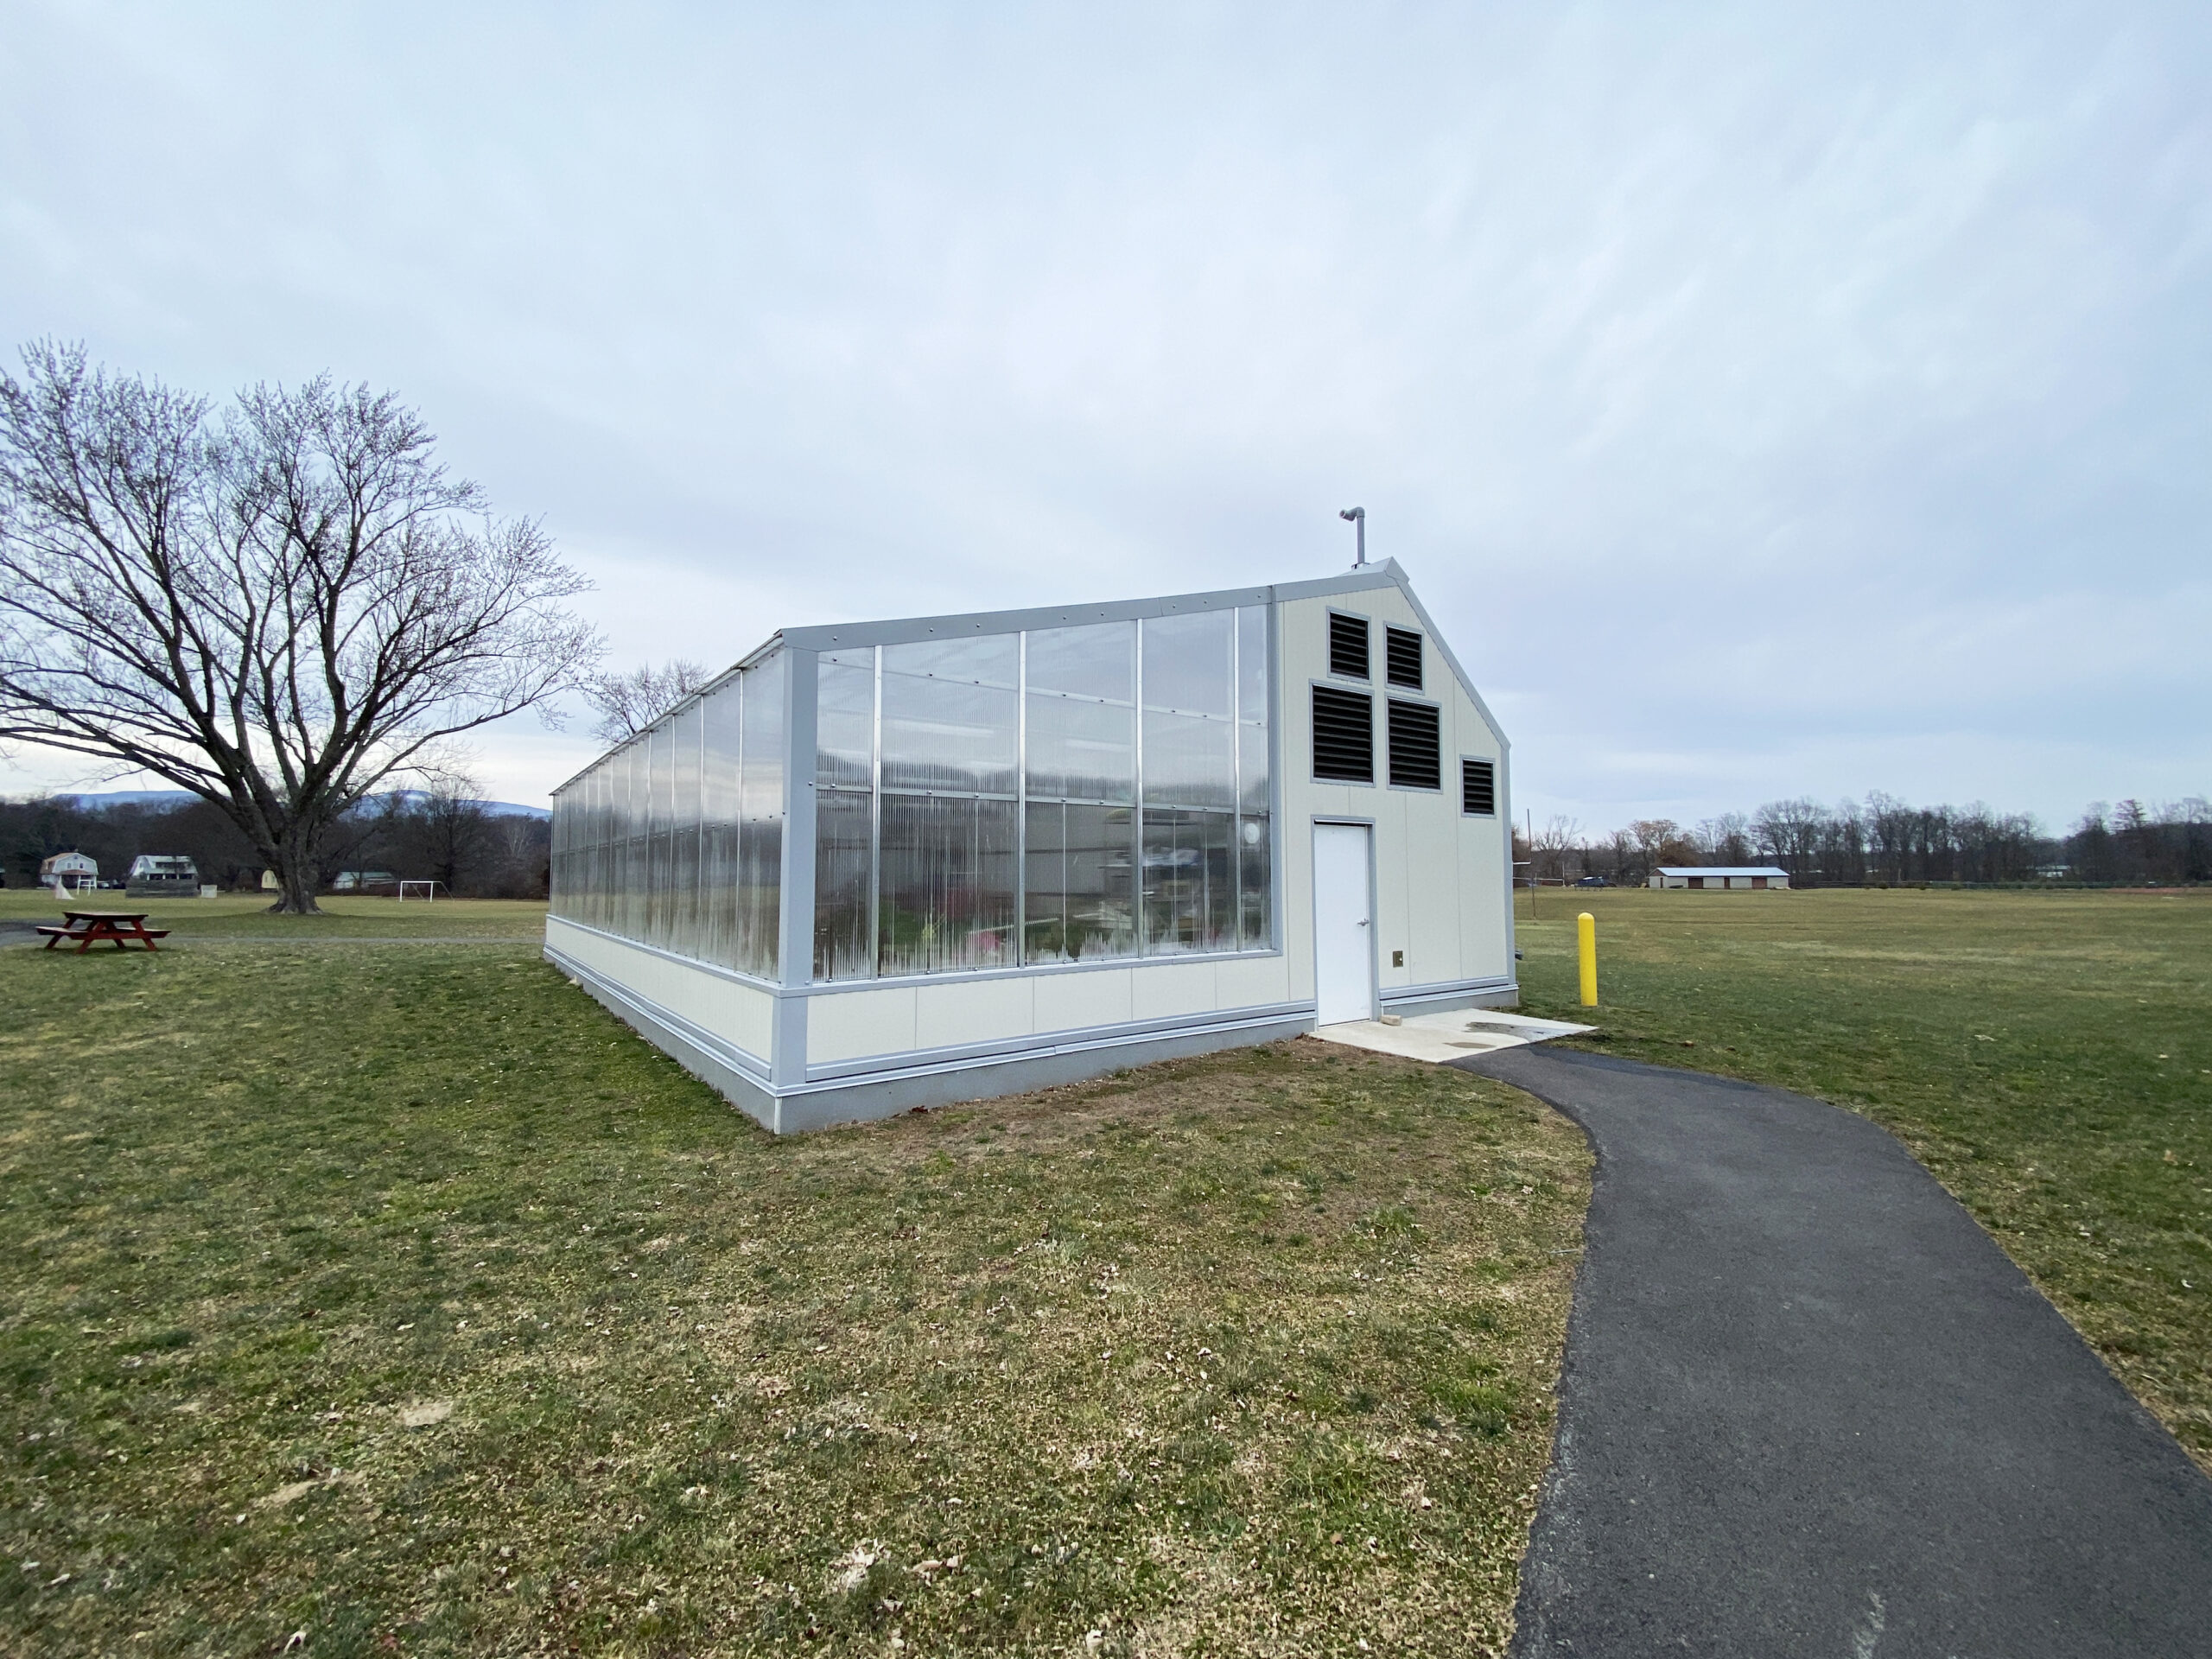 school greenhouse